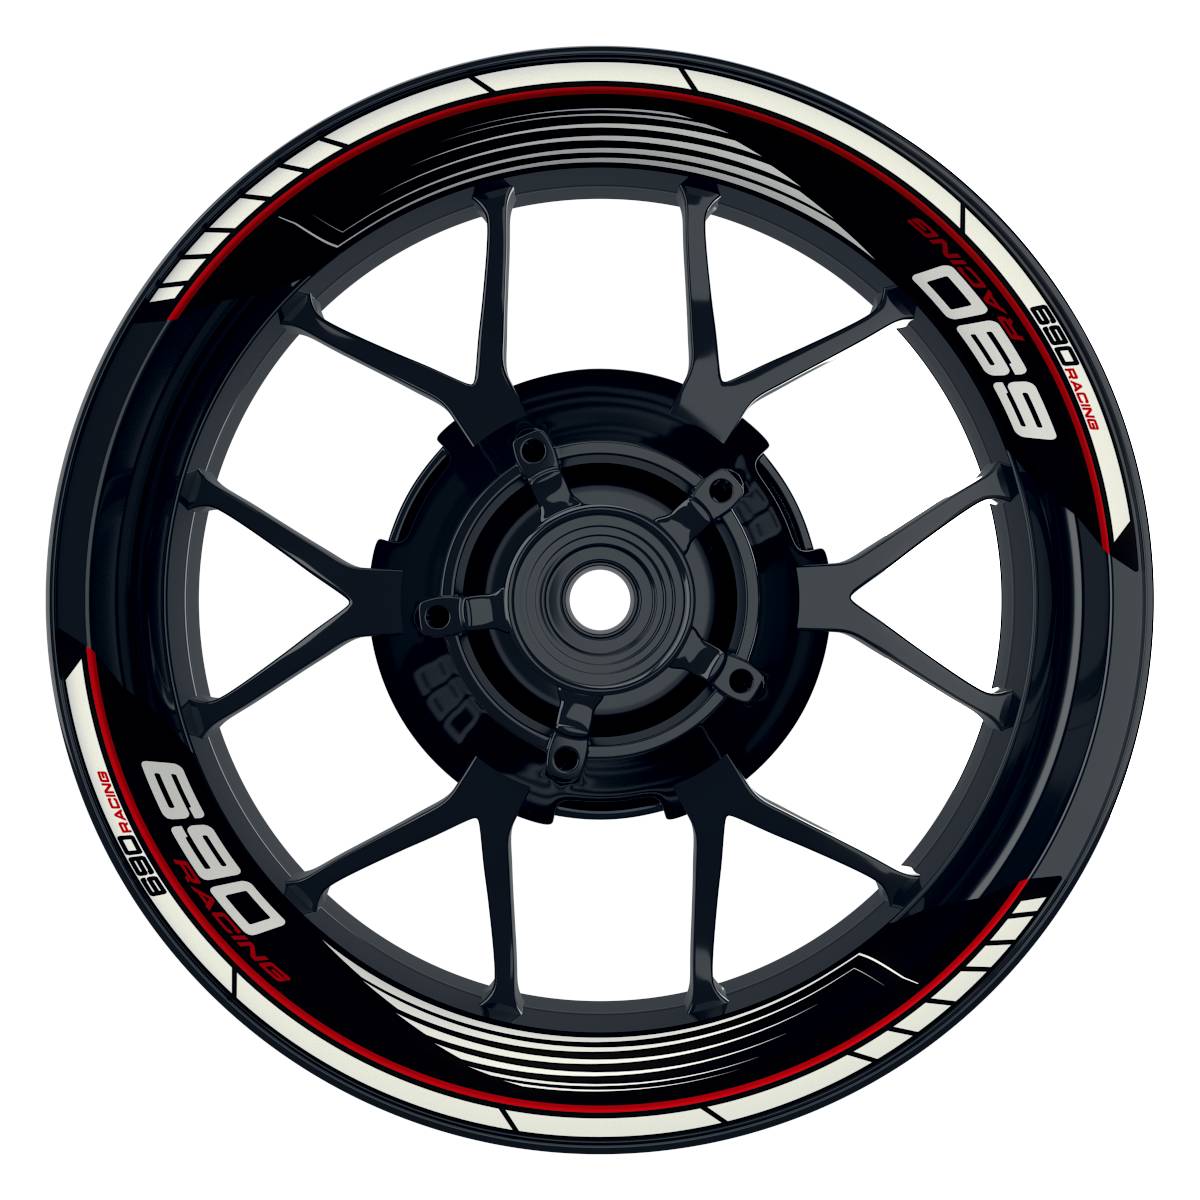 KTM Racing 690 SAW schwarz rot Frontansicht